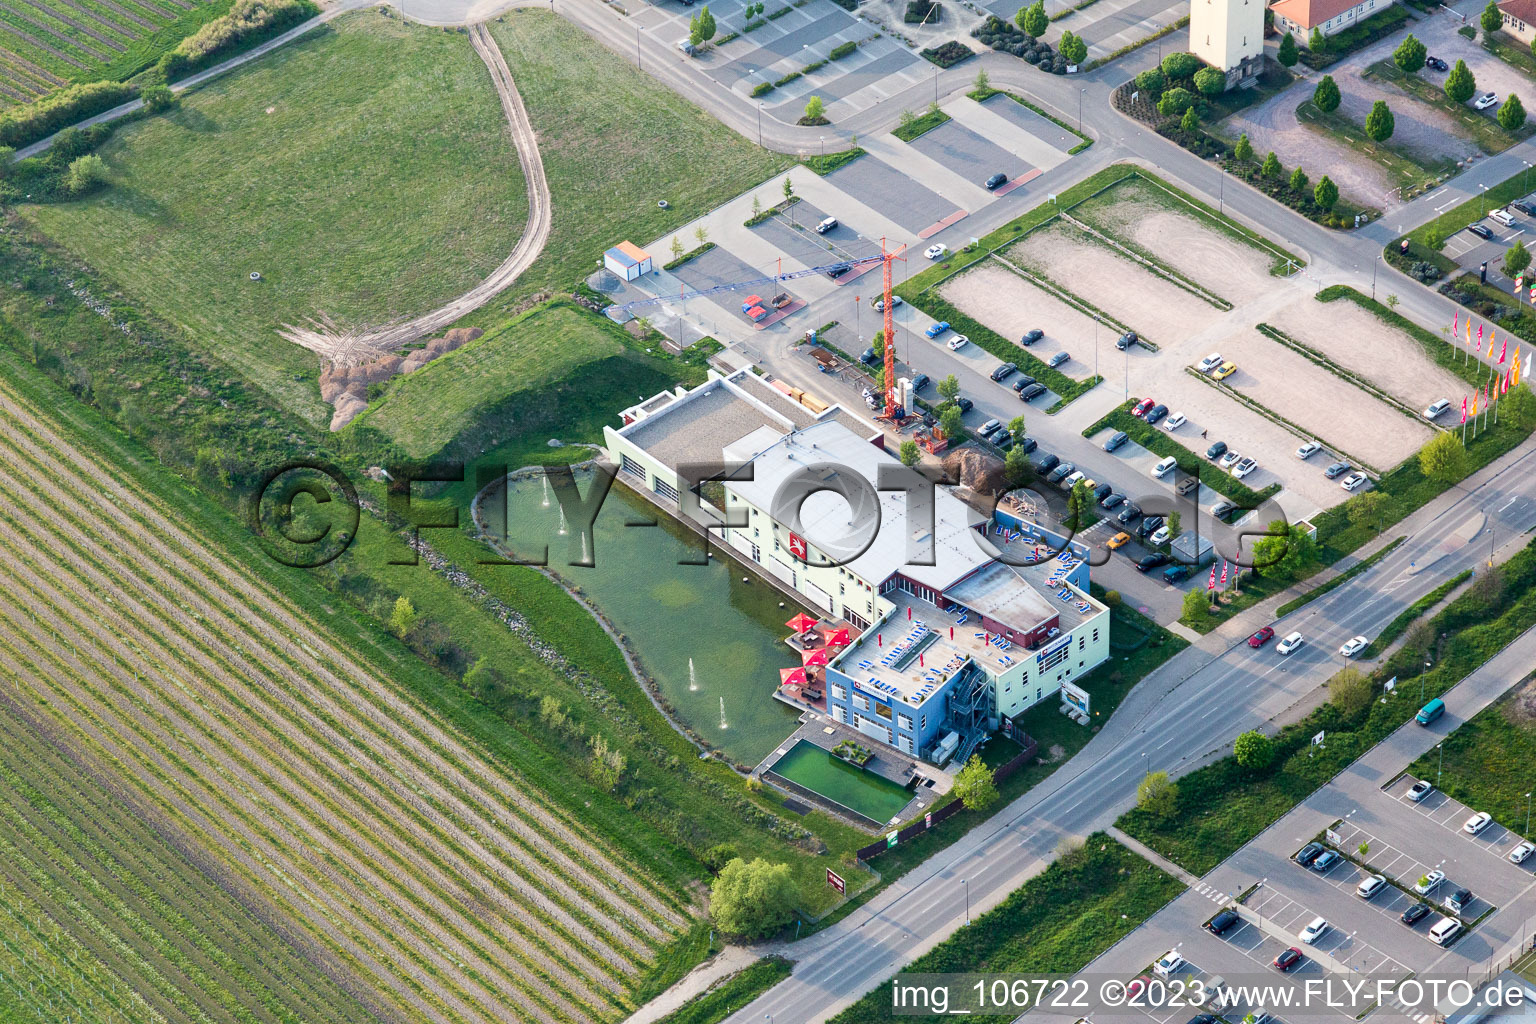 Vue aérienne de Pfizenmeier Fitness à Neustadt an der Weinstraße dans le département Rhénanie-Palatinat, Allemagne